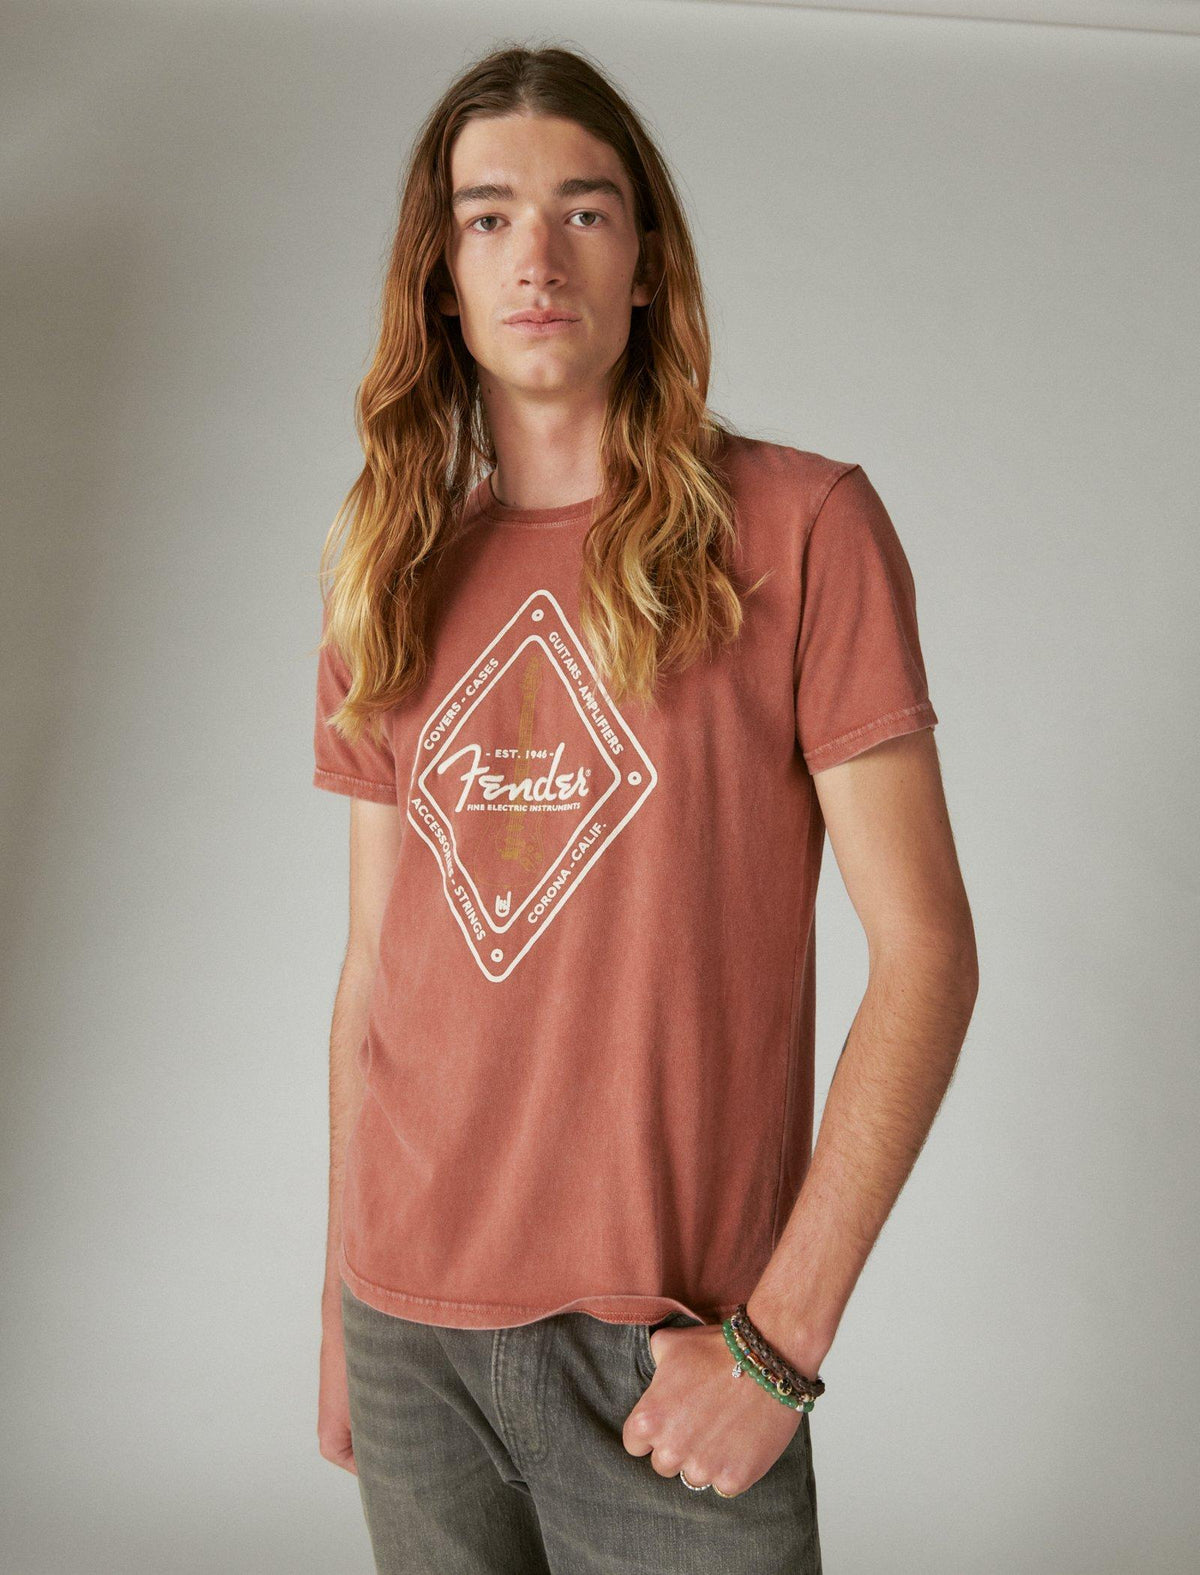 Lucky Brand Fender Diamond Tee - Men's Clothing Tops Shirts Tee Graphic T Shirts Burnt Henna